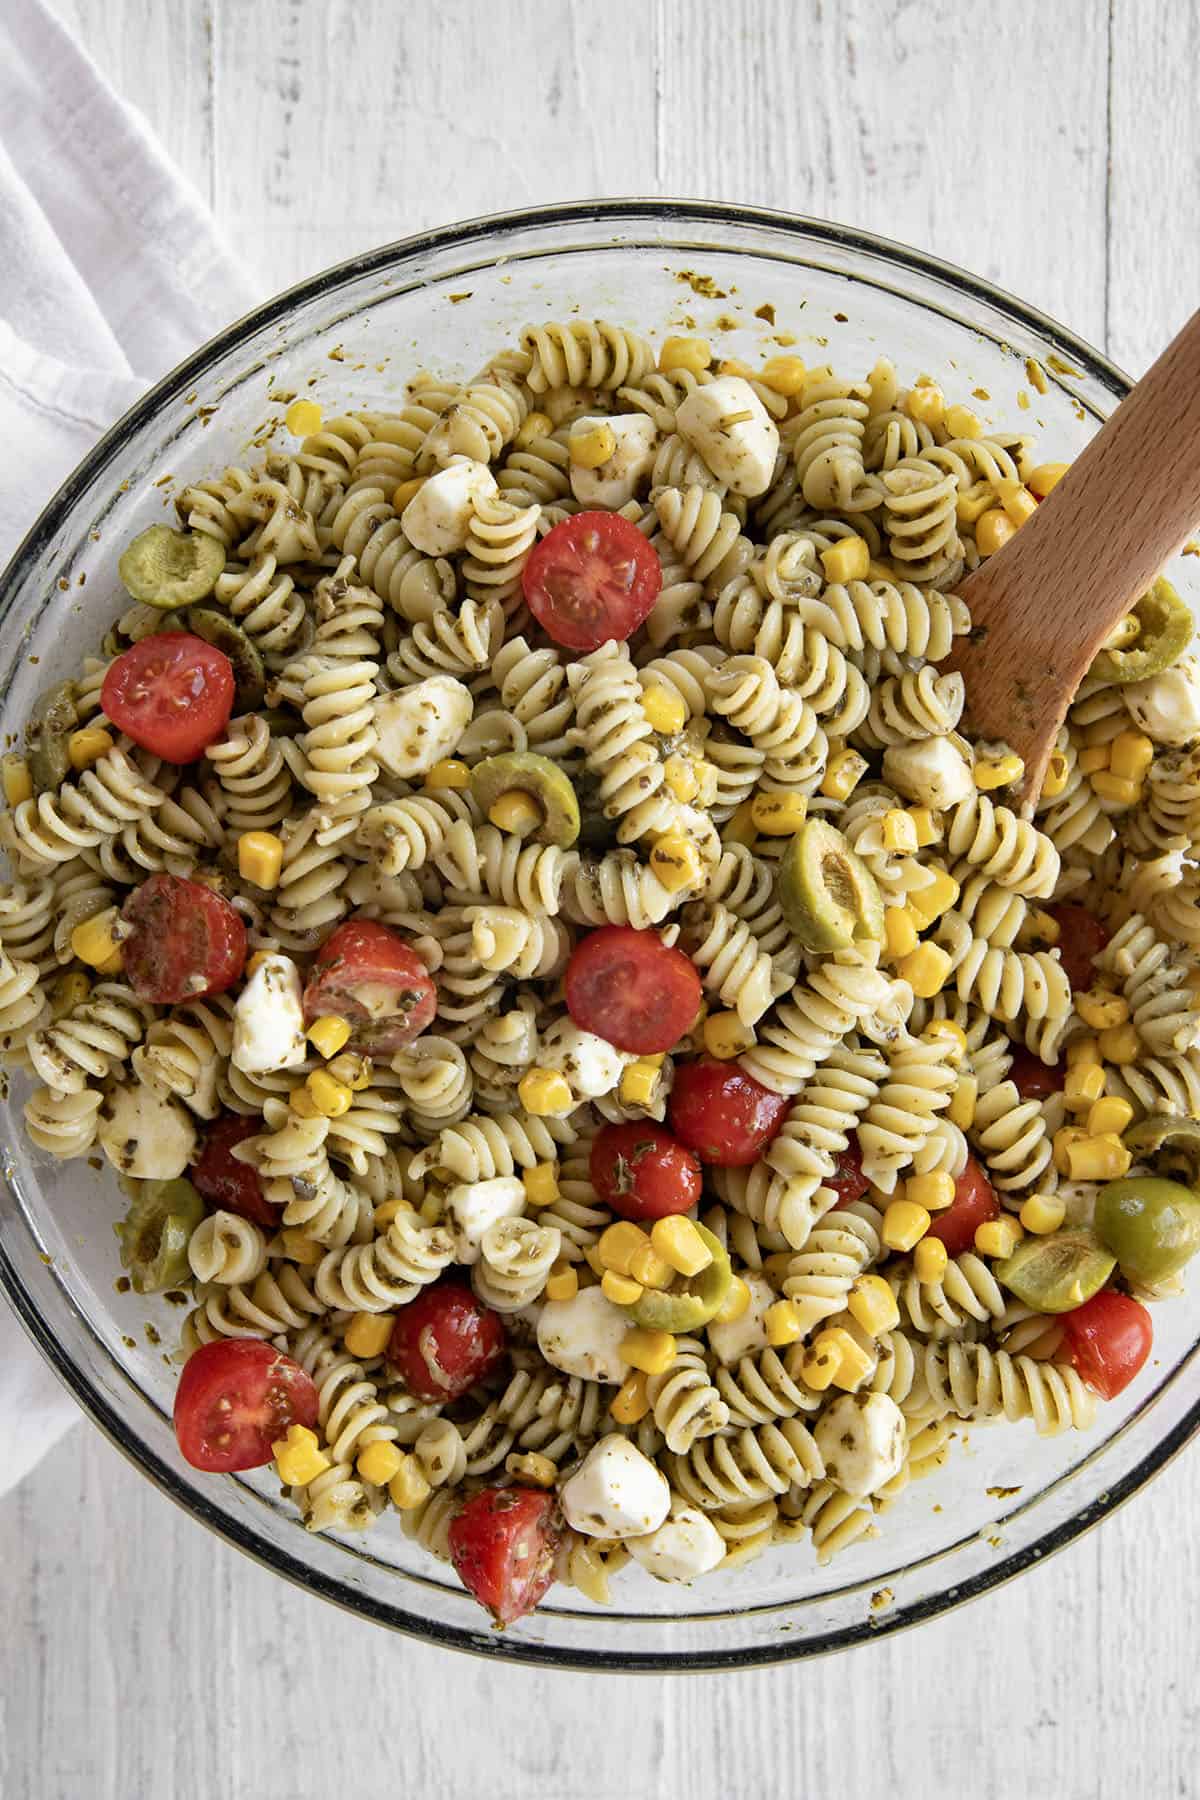 buttermilk pesto pasta salad in a serving bowl